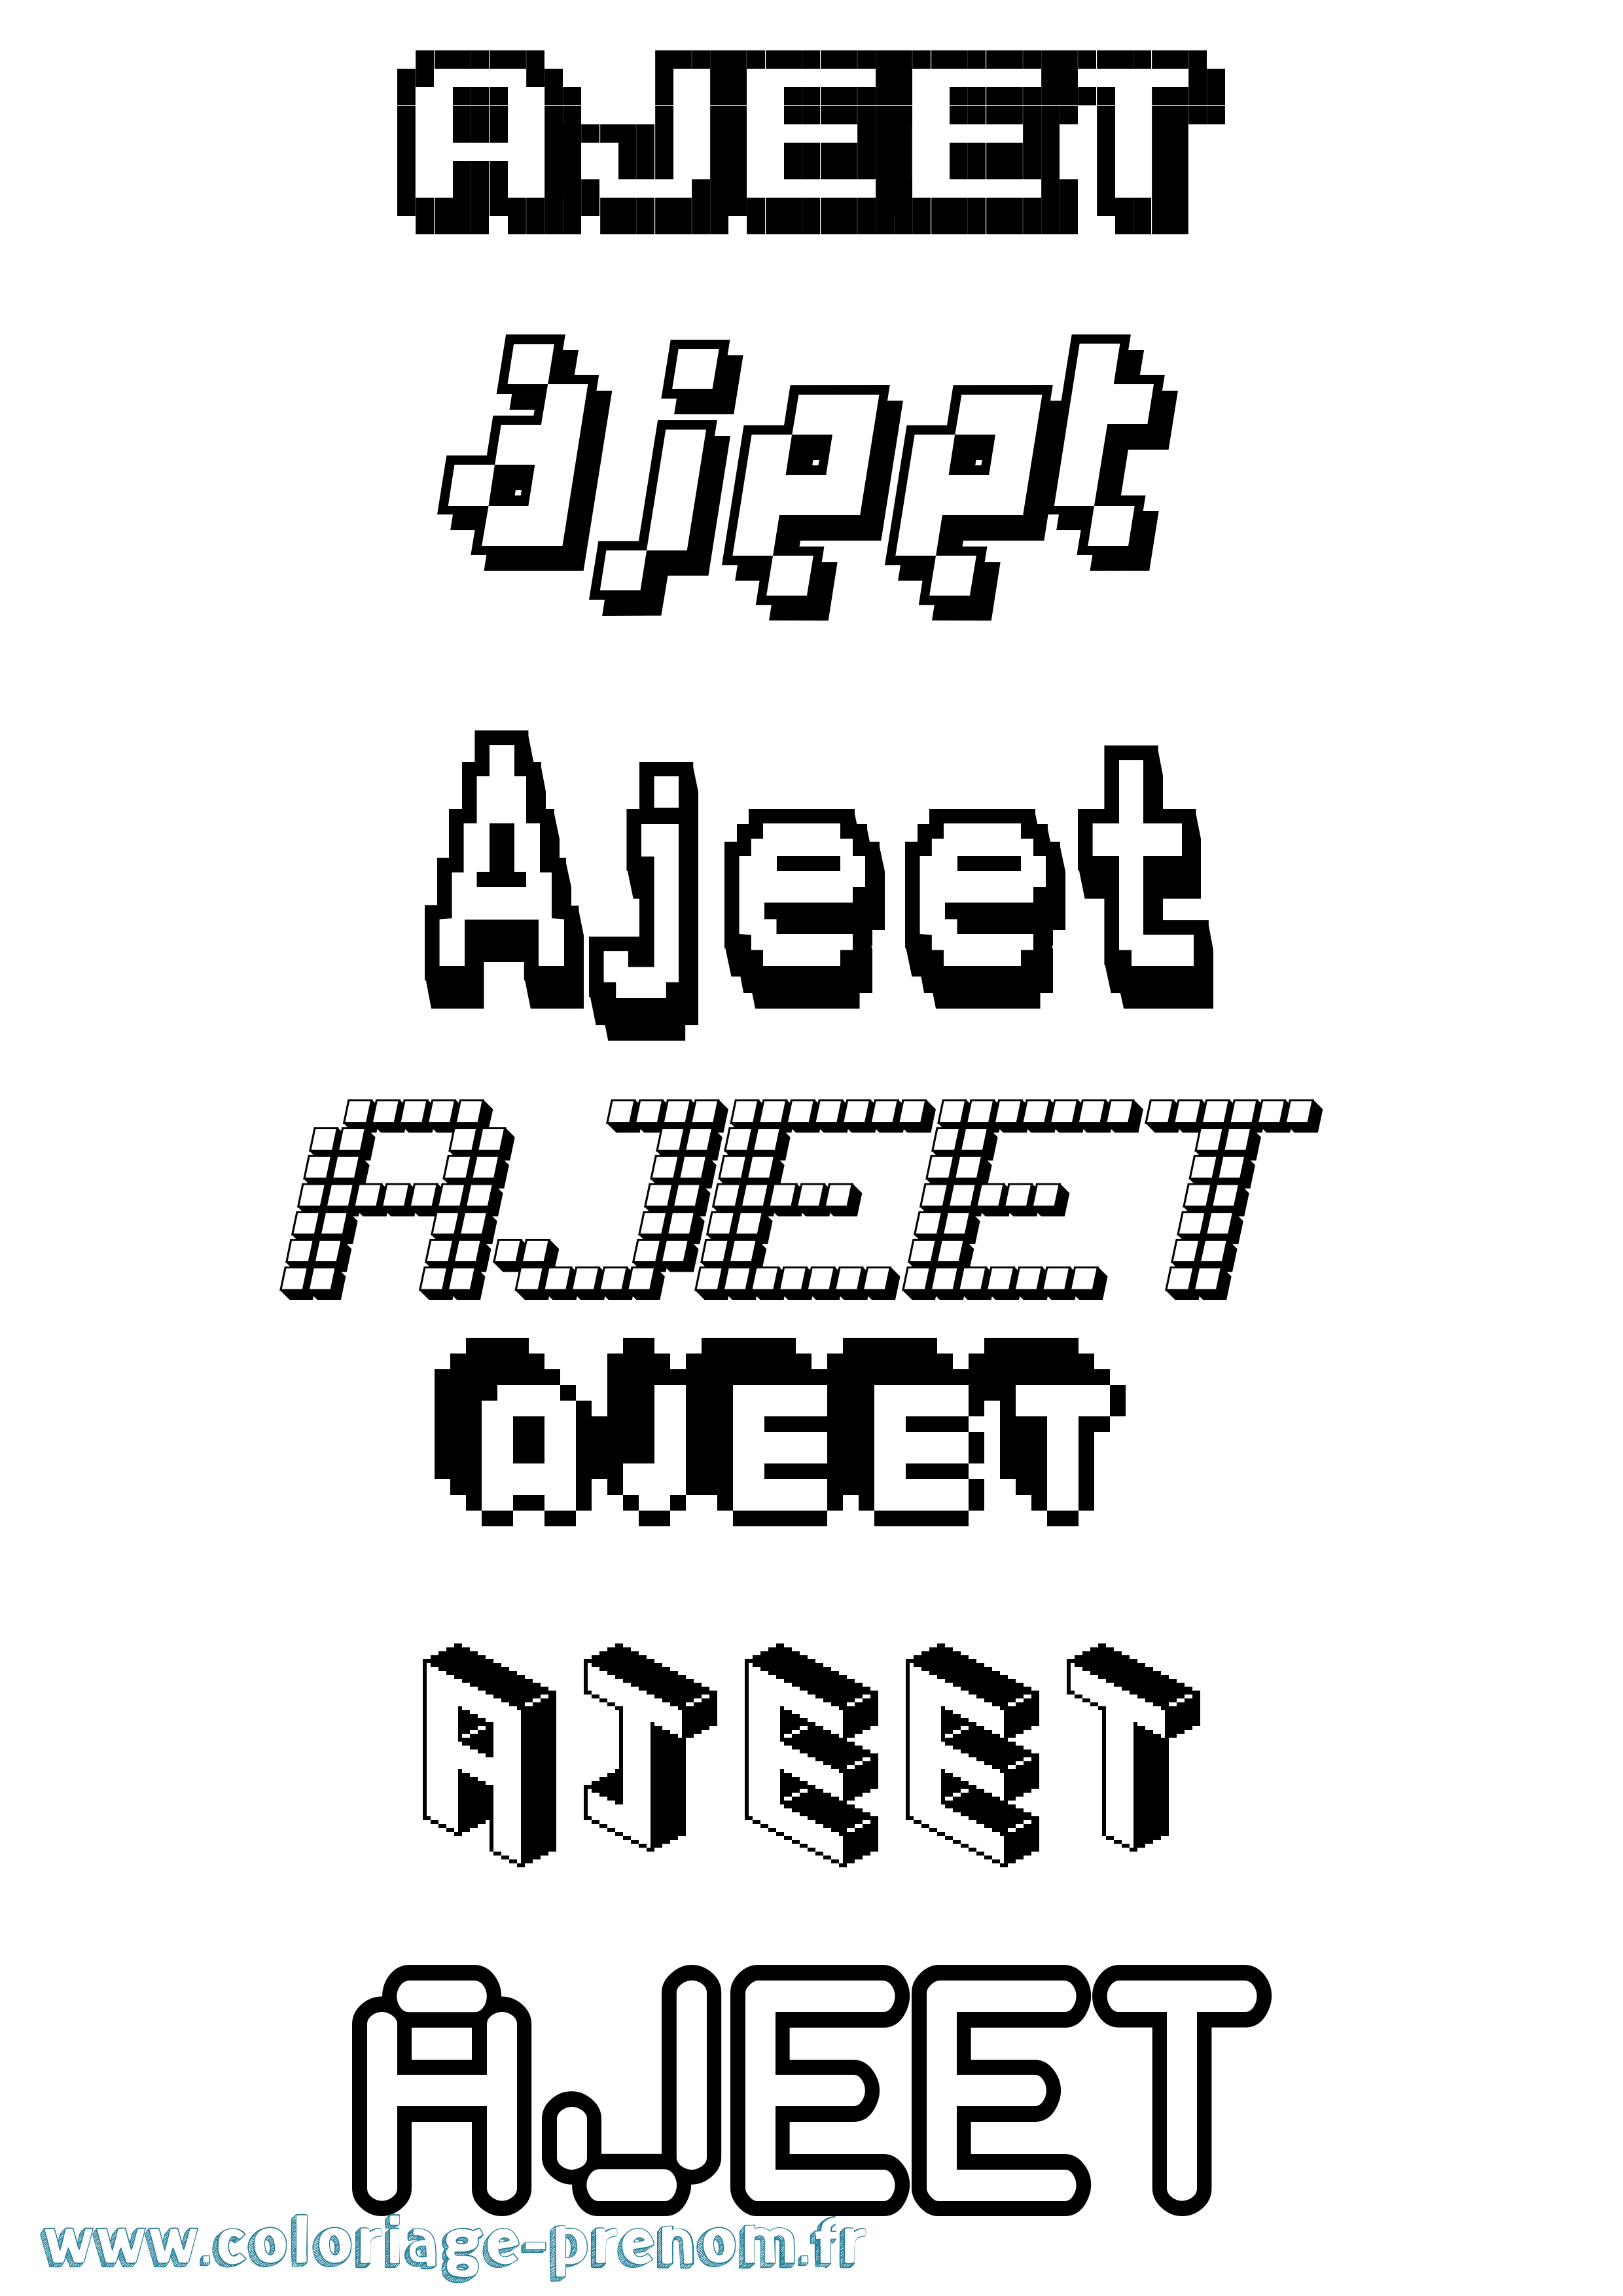 Coloriage prénom Ajeet Pixel